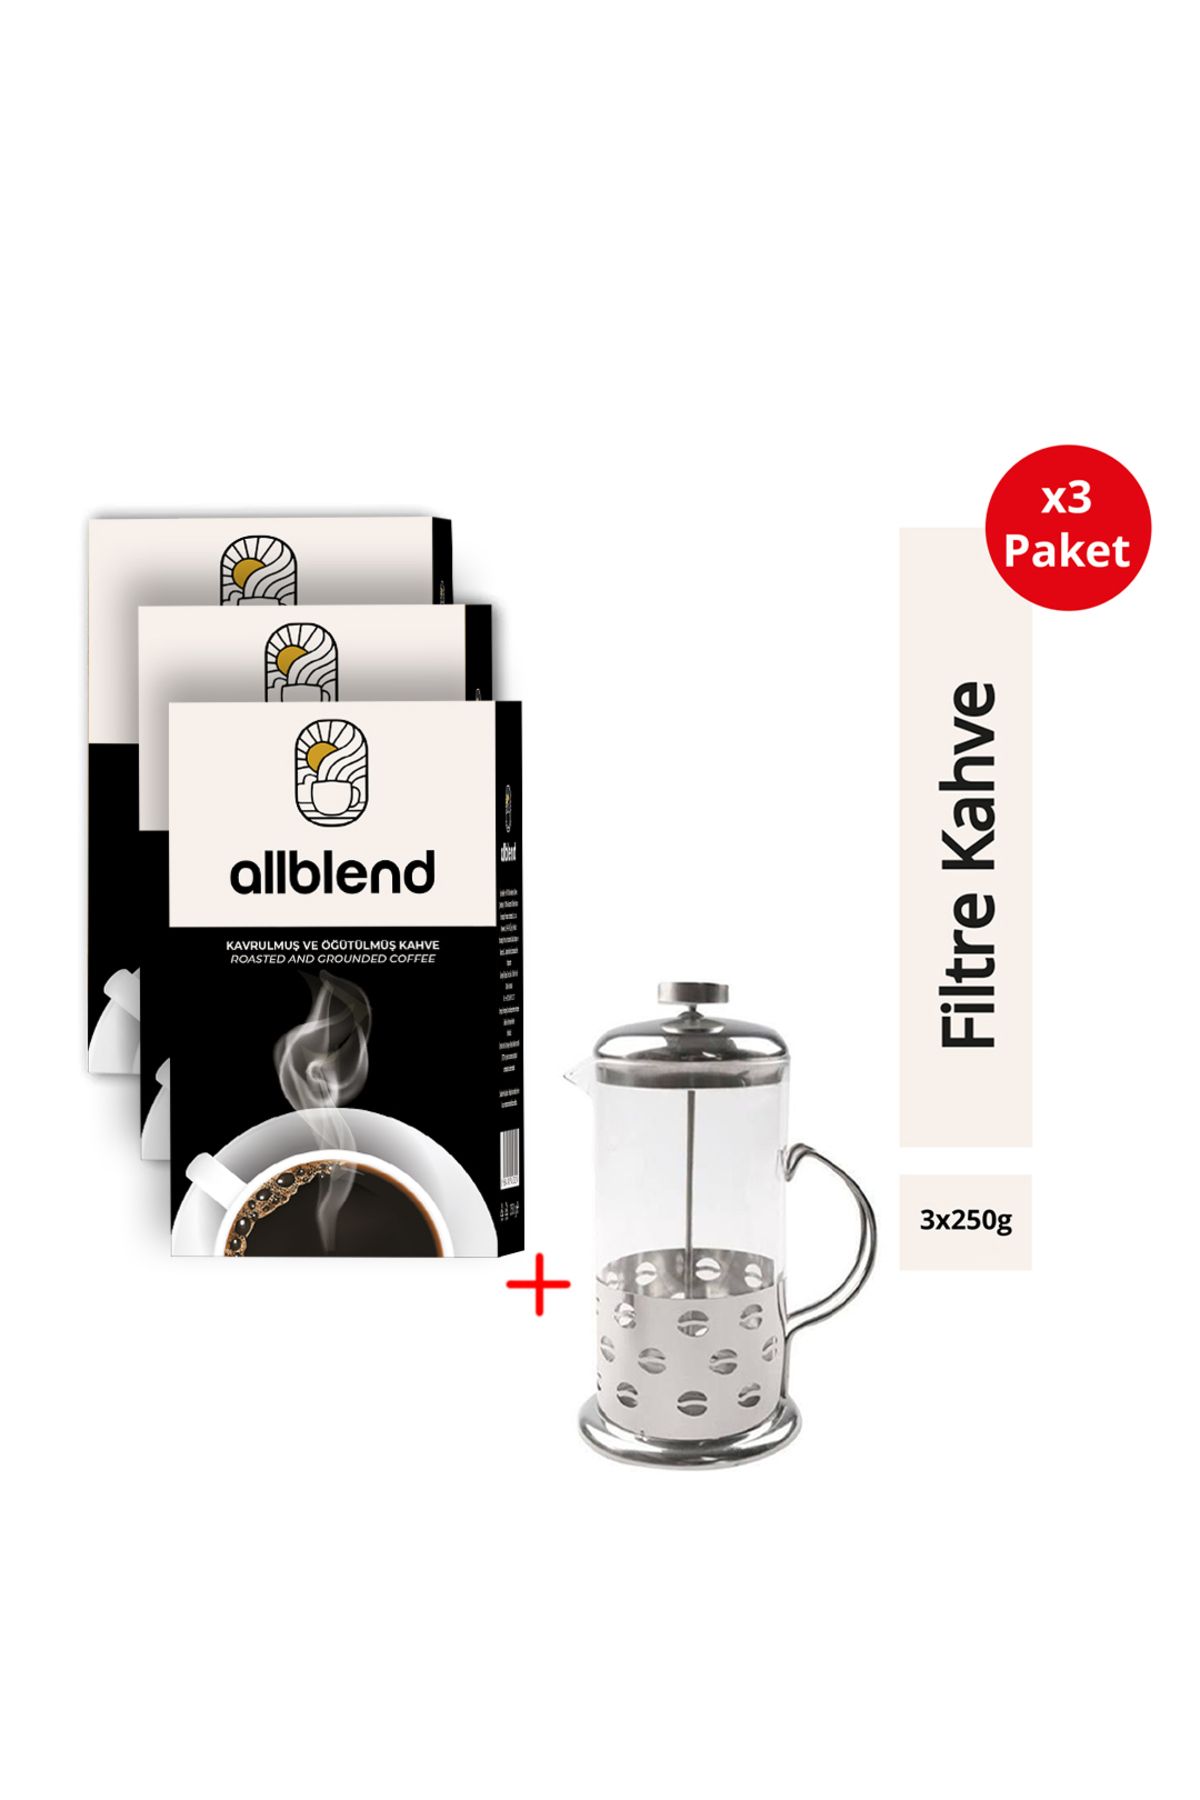 AllBlend Filtre Kahve 250 gr. x 3 Adet (frenchpress hediyeli) AB250X3